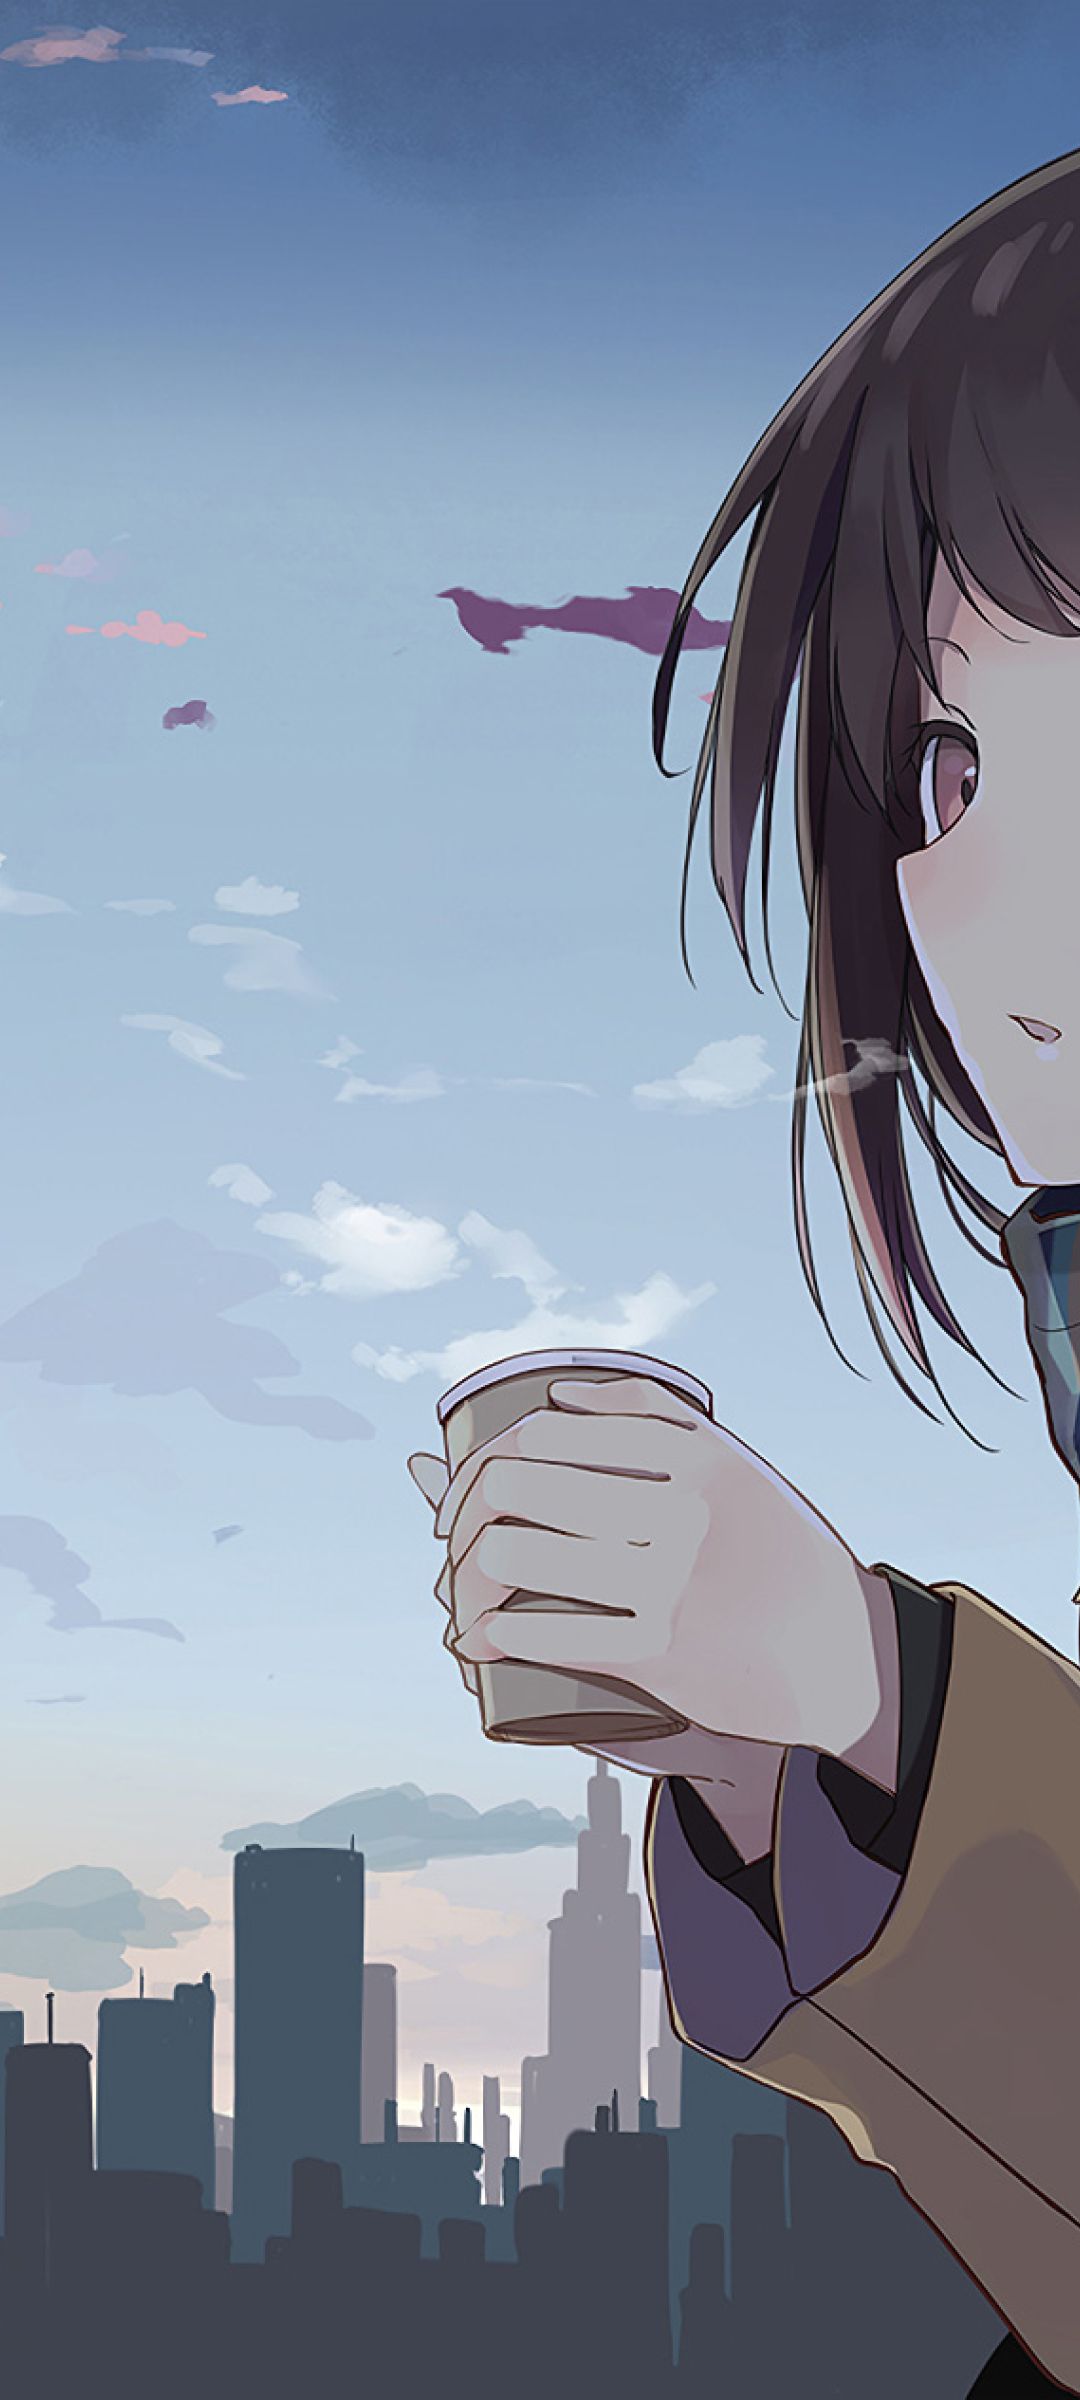 Anime Girl Holding Tea Outside 1080x2400 Resolution Wallpaper, HD Anime 4K Wallpaper, Image, Photo and Background